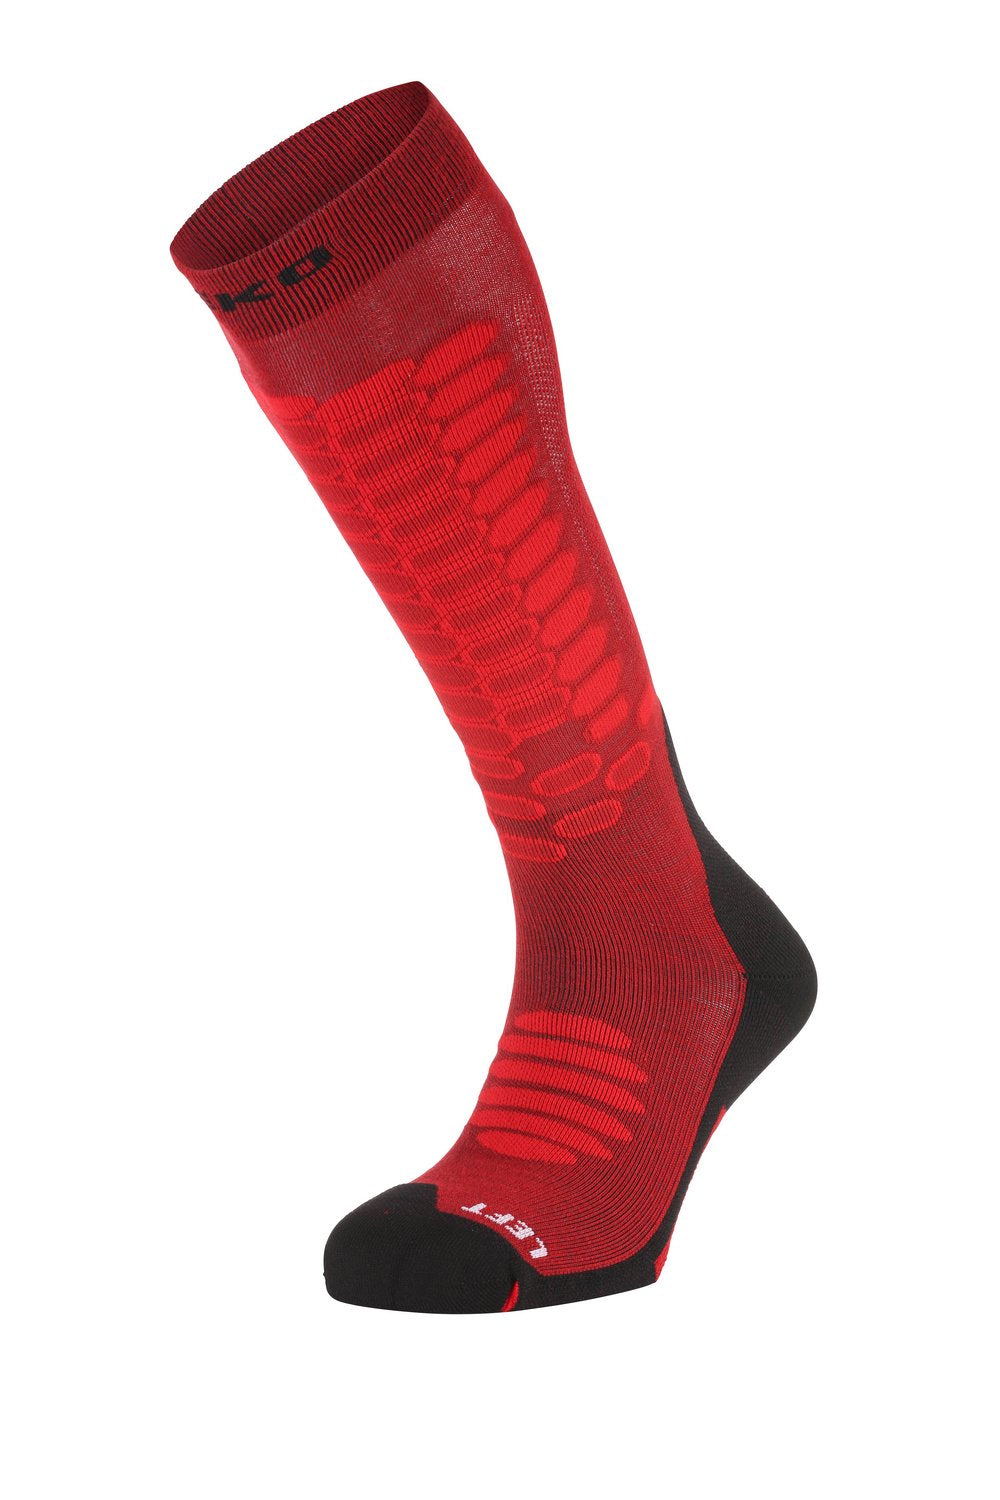 Ski Ultralight Compression Socks, Winter Sports, Activity